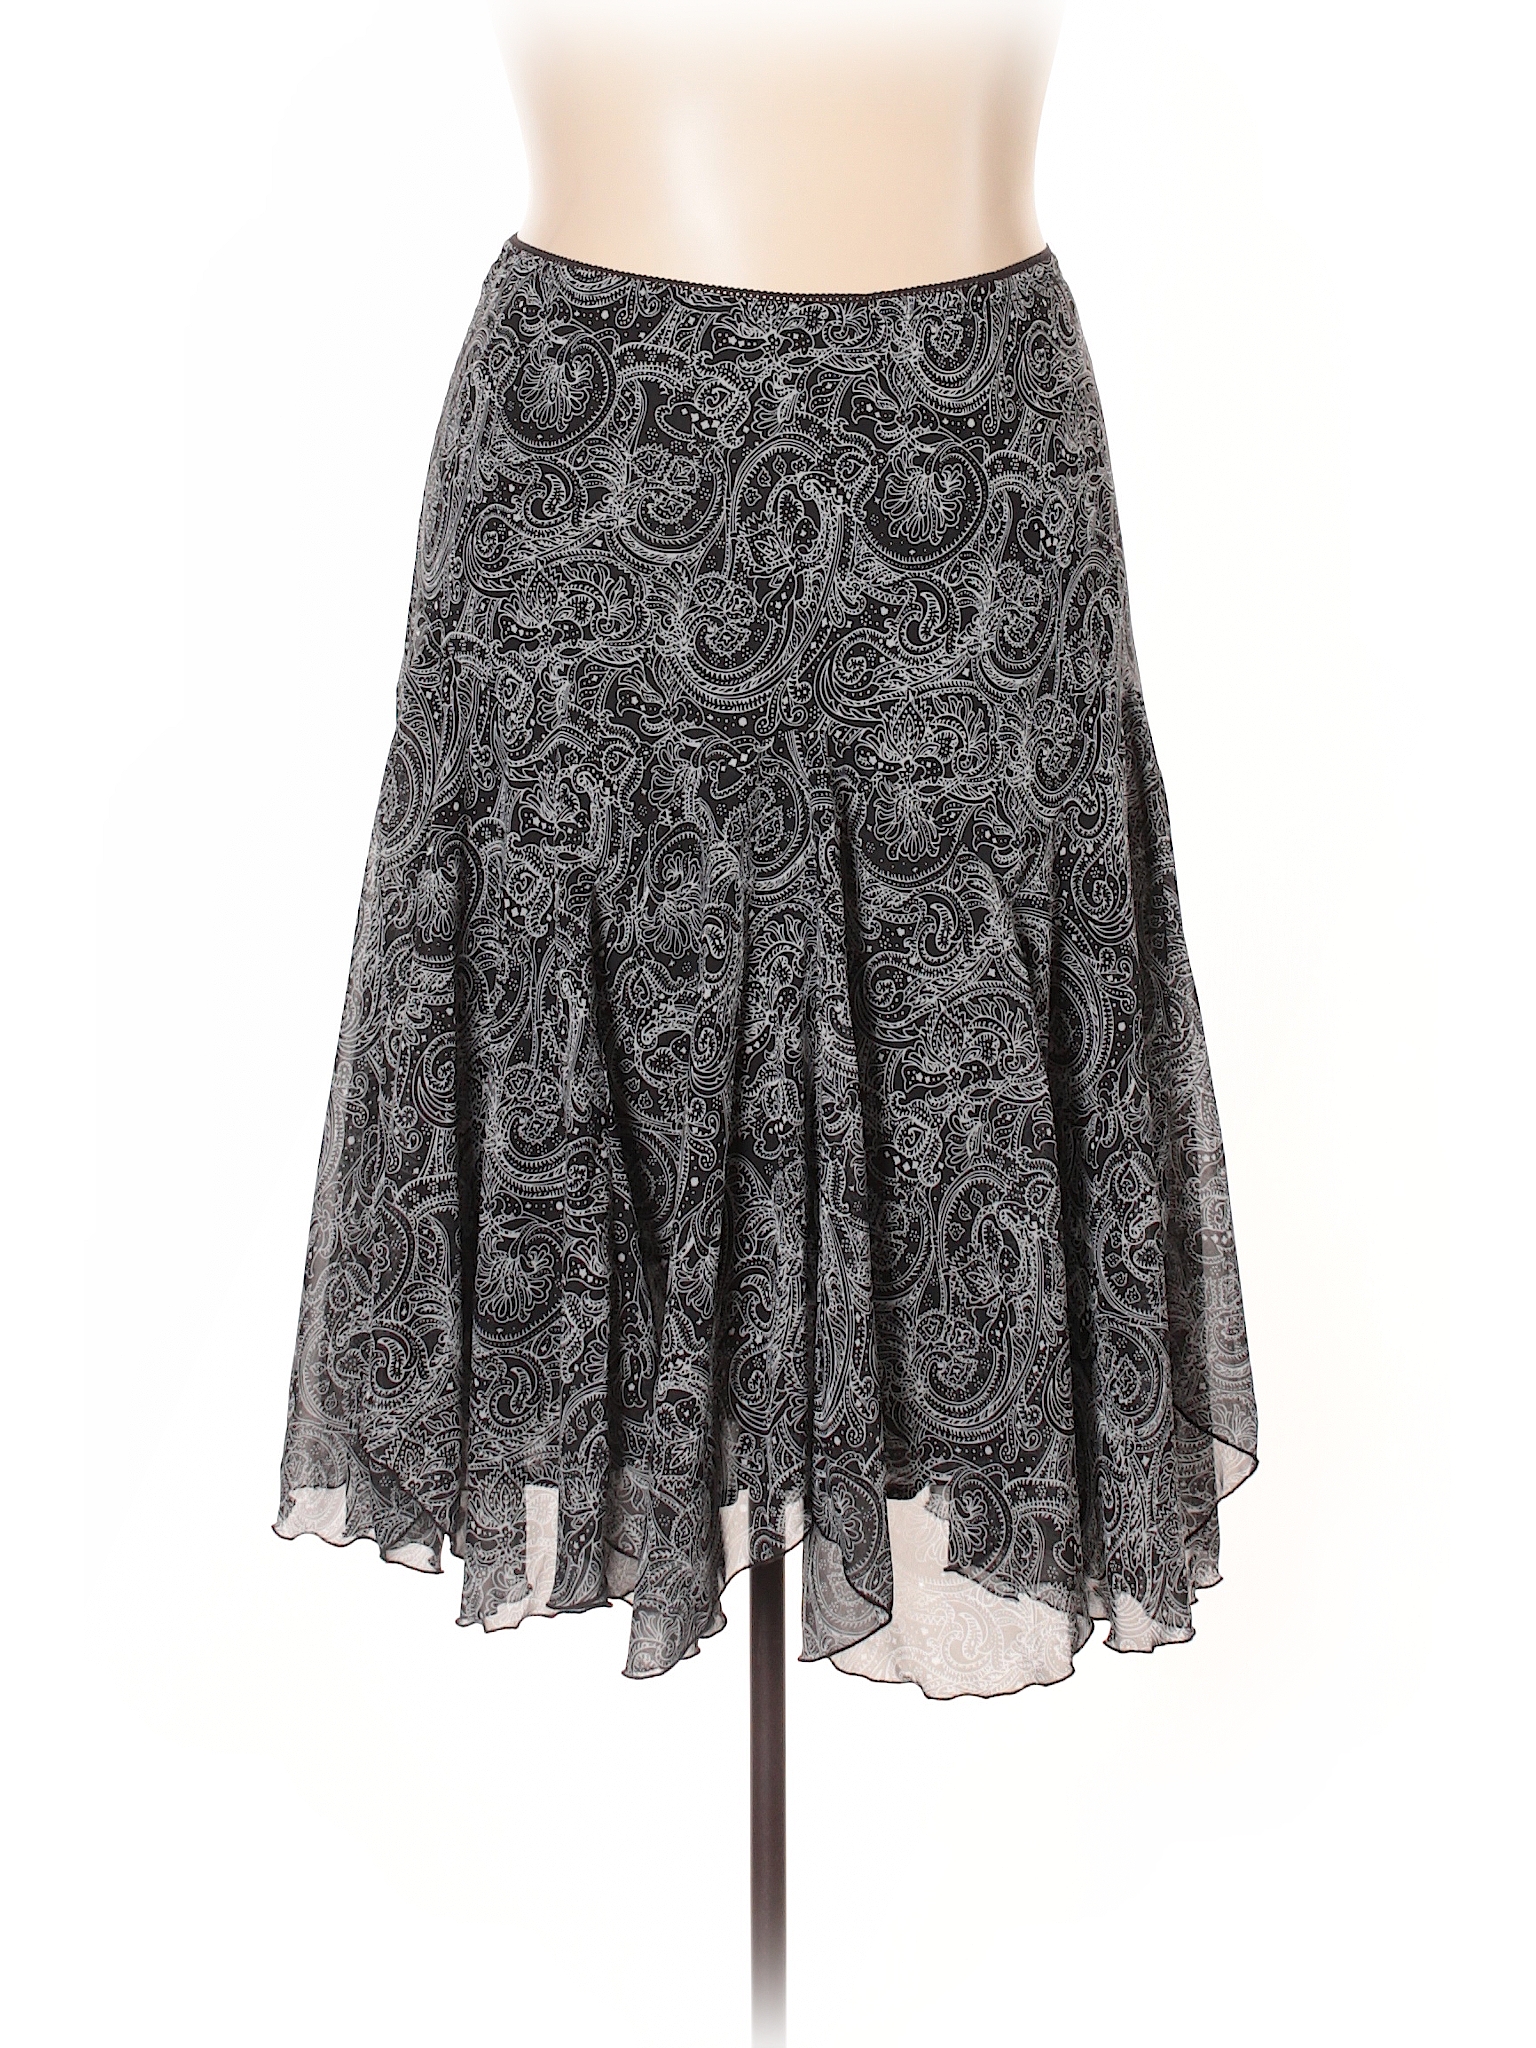 Newsworthy 100% Polyester Print Black Casual Skirt Size 2X (Plus) - 74% ...